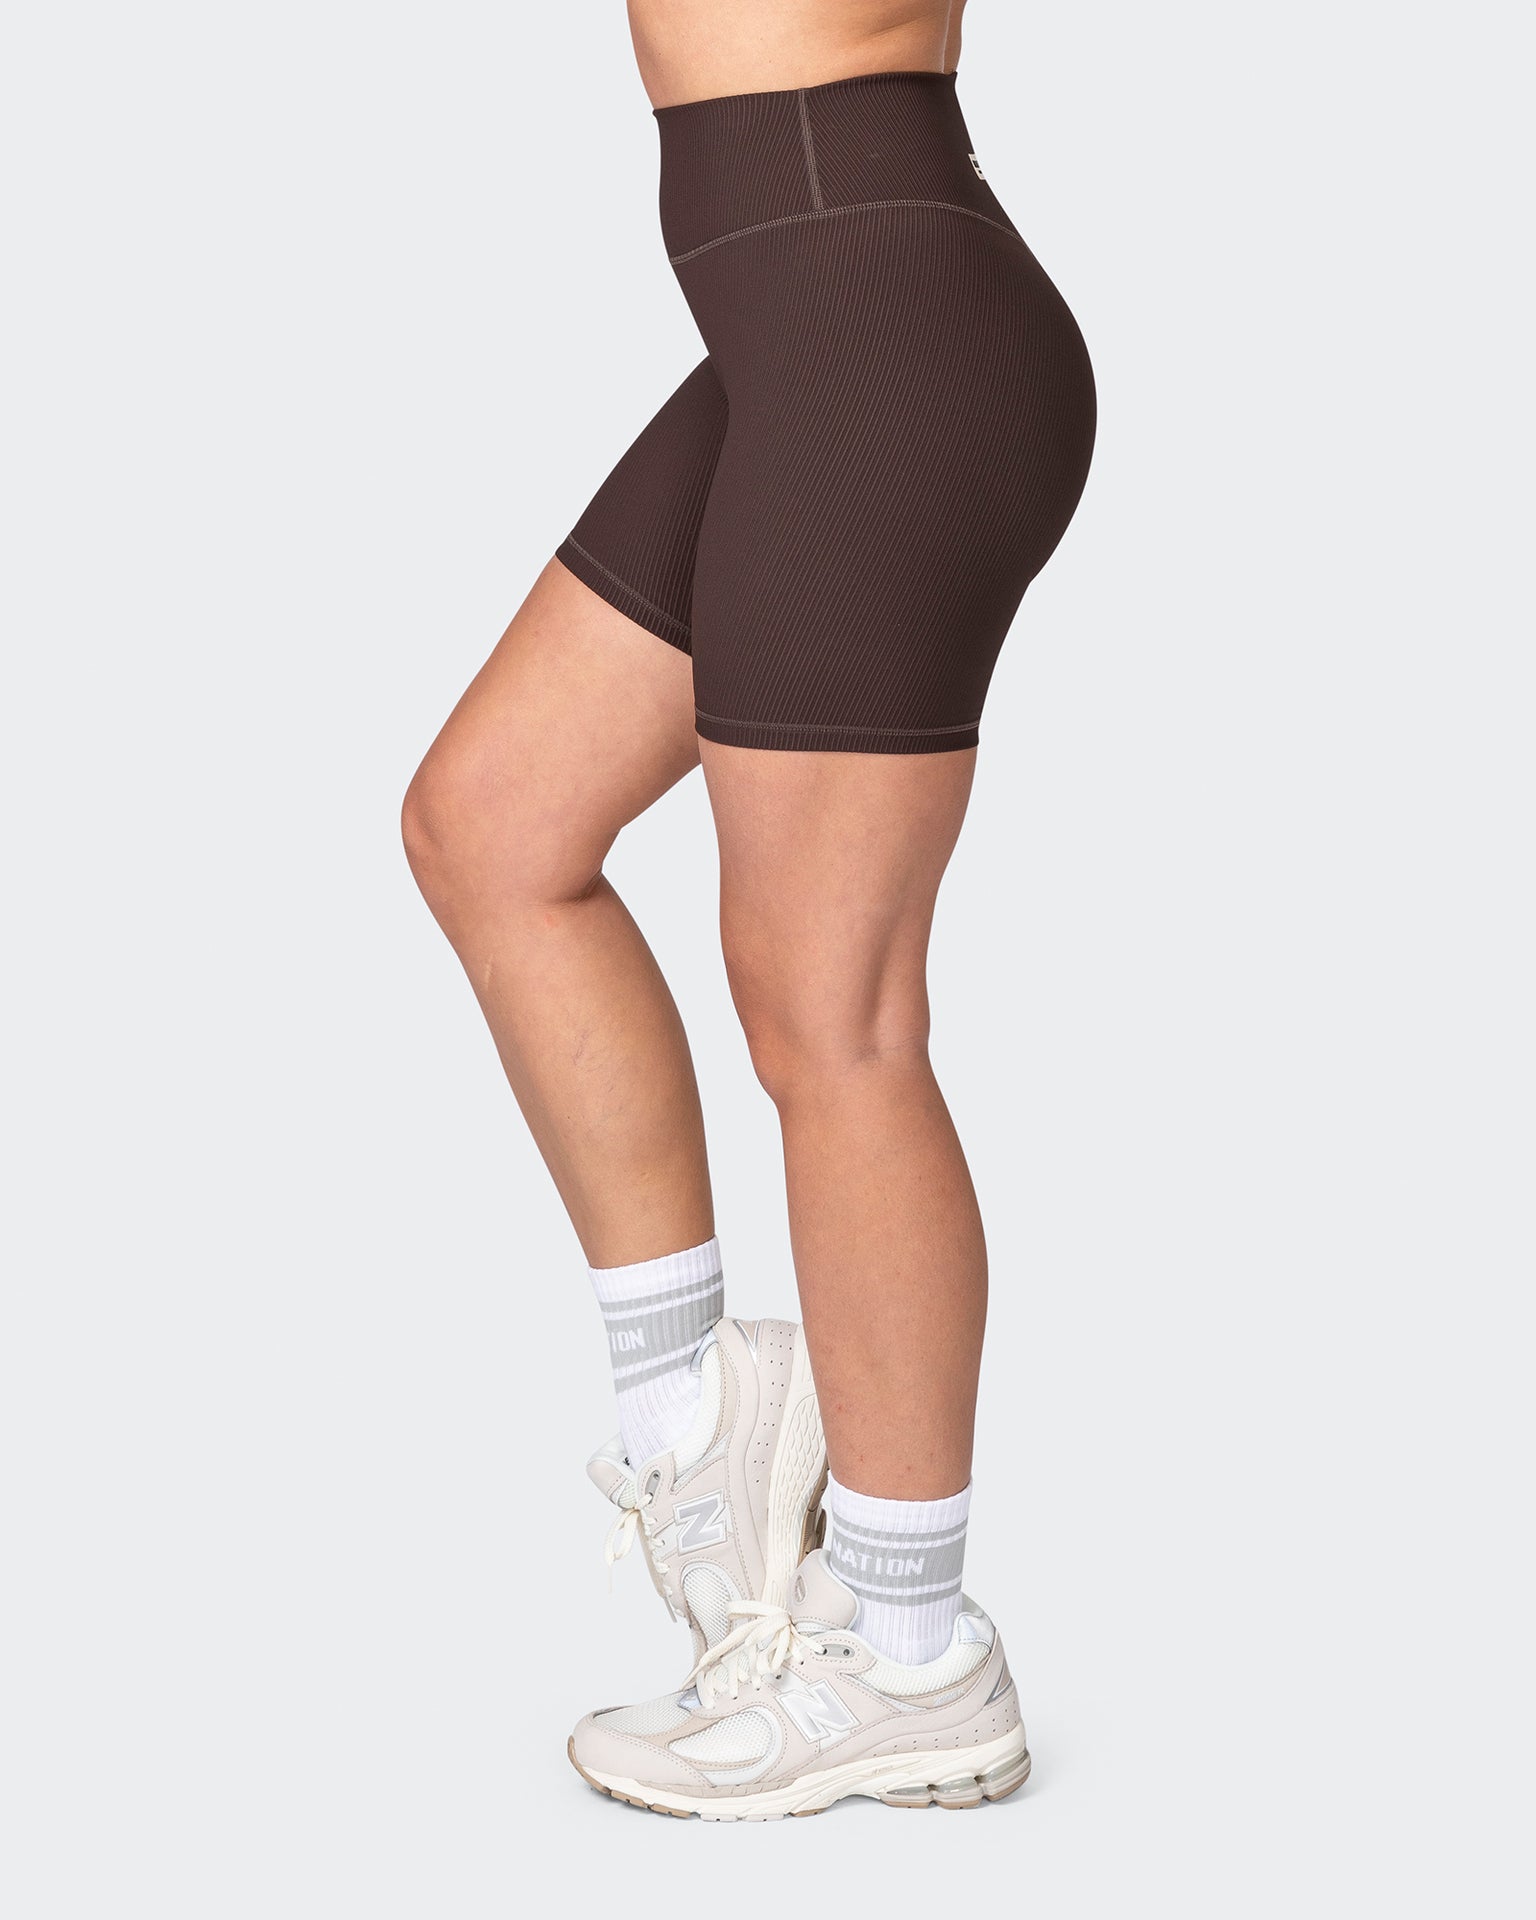 musclenation Shorts Zero Rise Rib Bike Shorts - Cocoa (Silicone Logo)